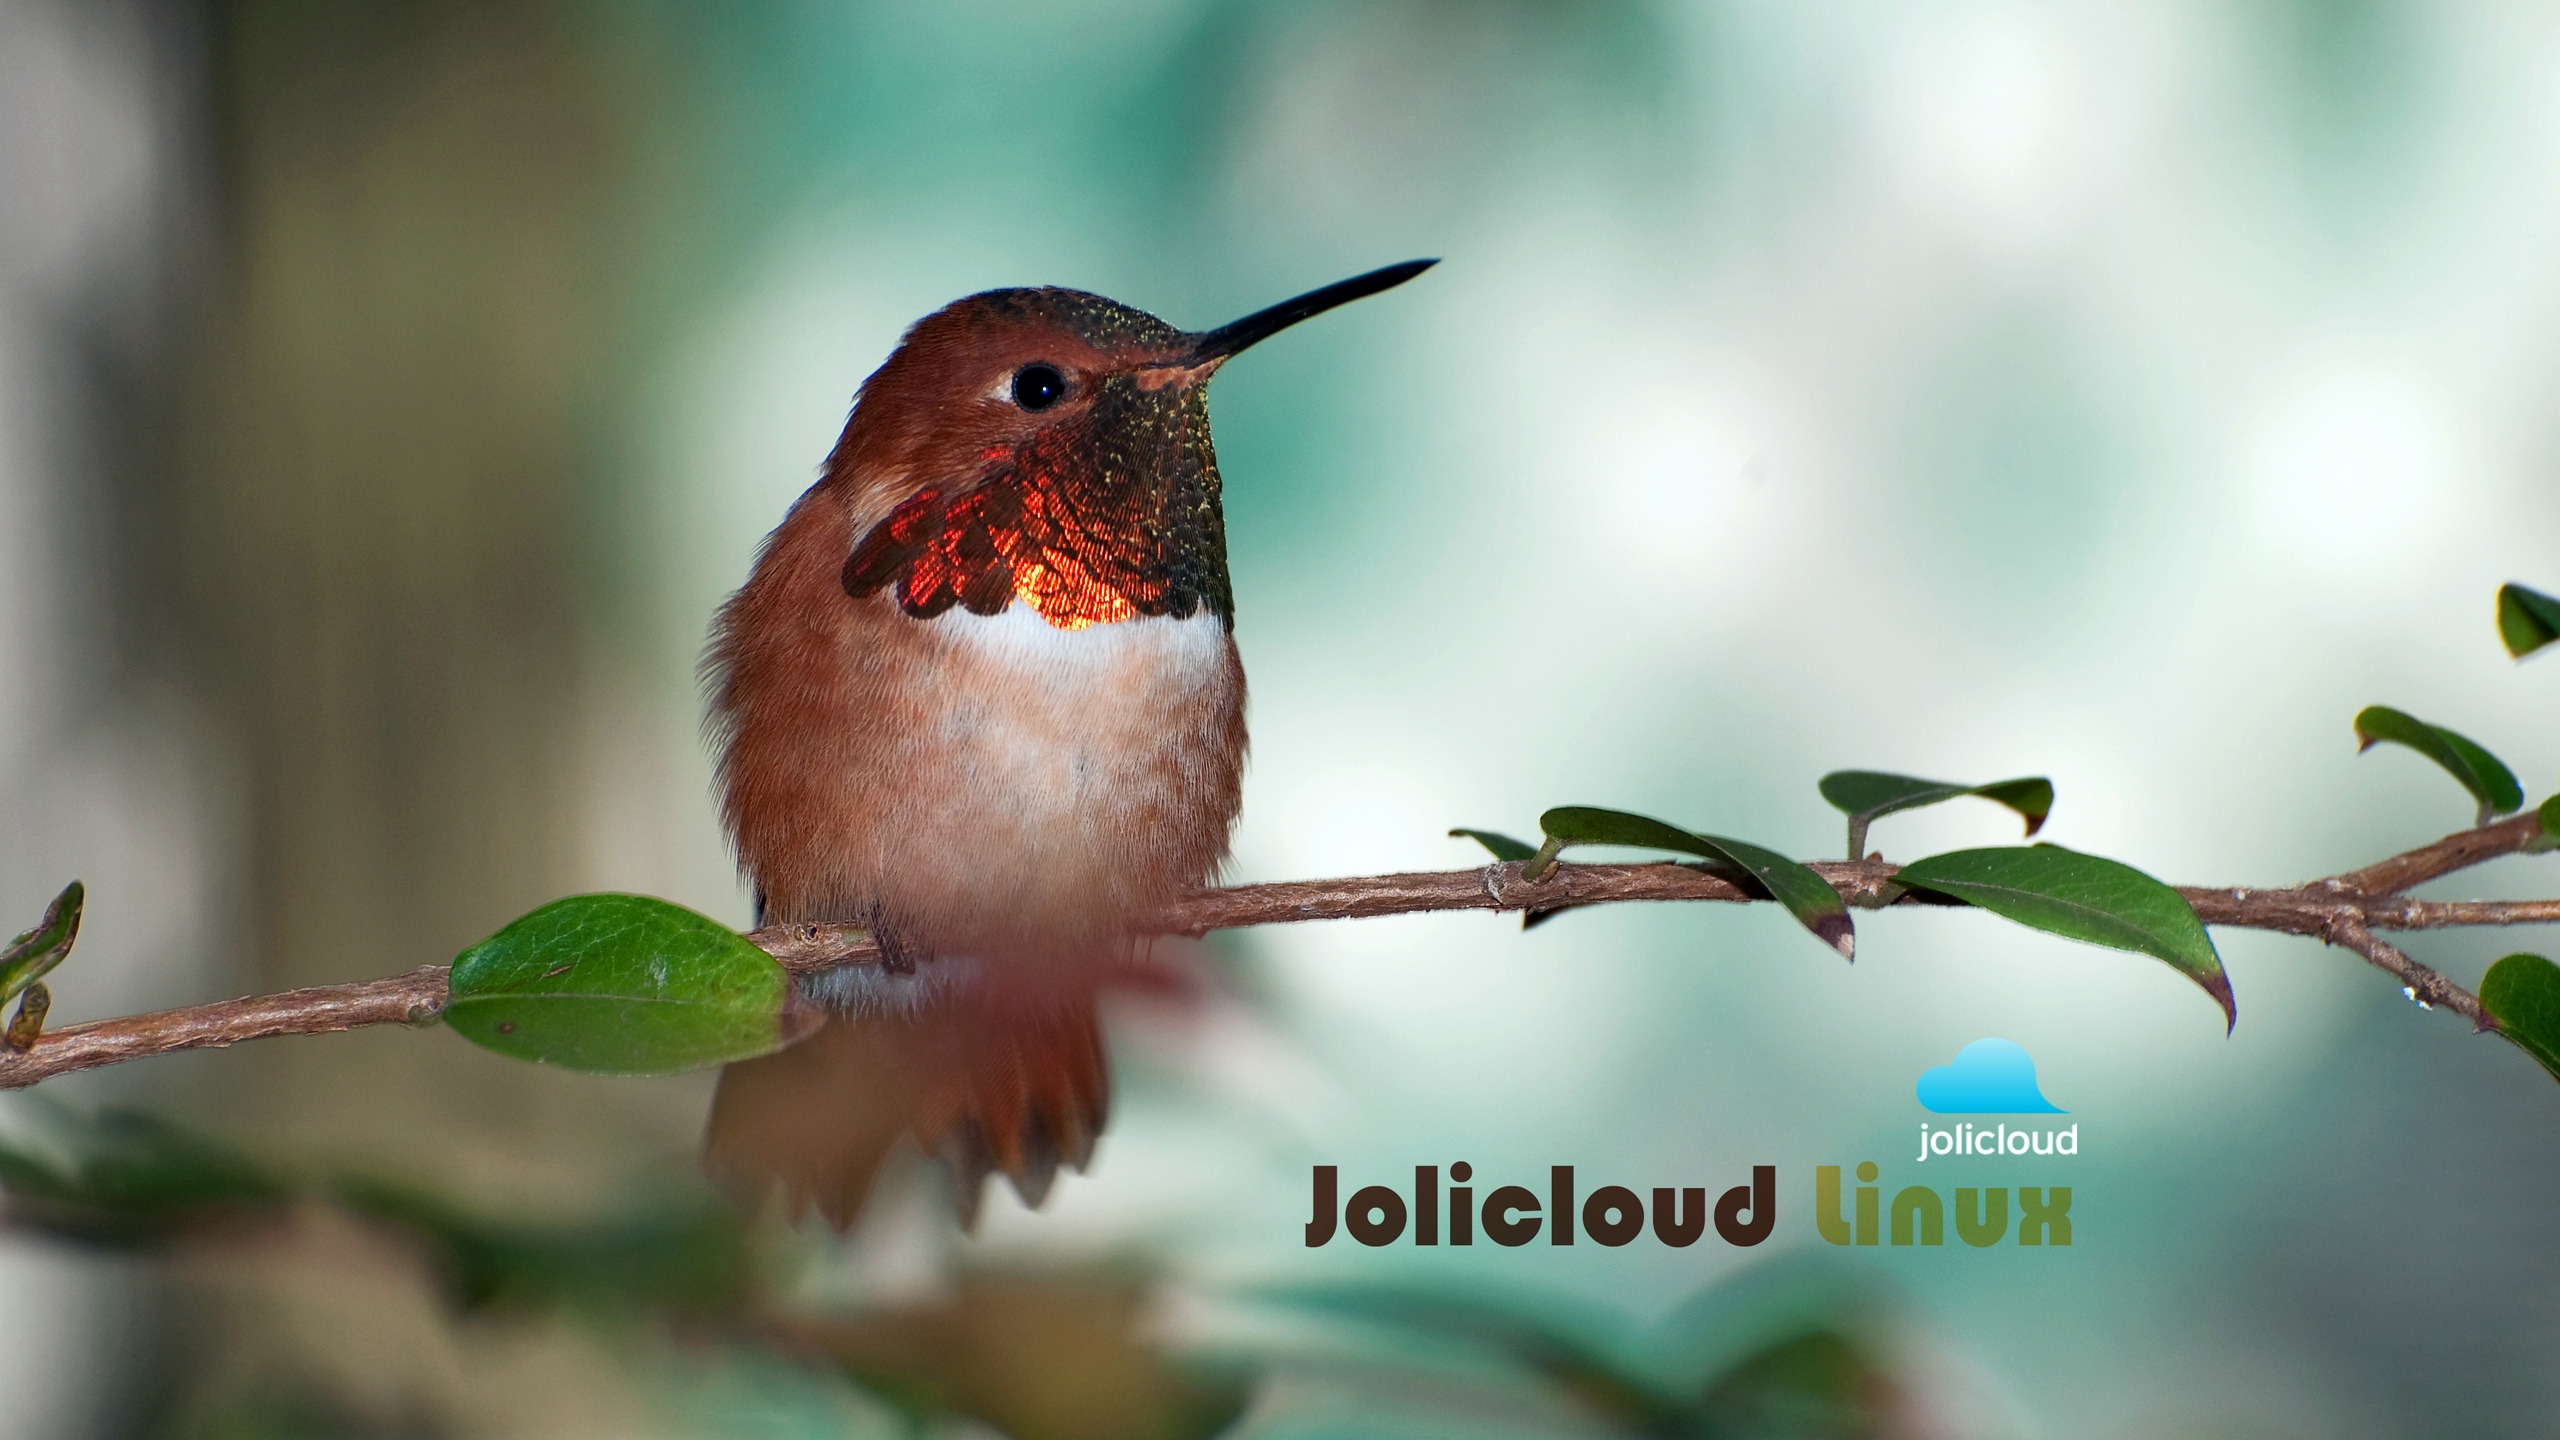 Jolicloud Linux Hummingbird for 2560x1440 HDTV resolution